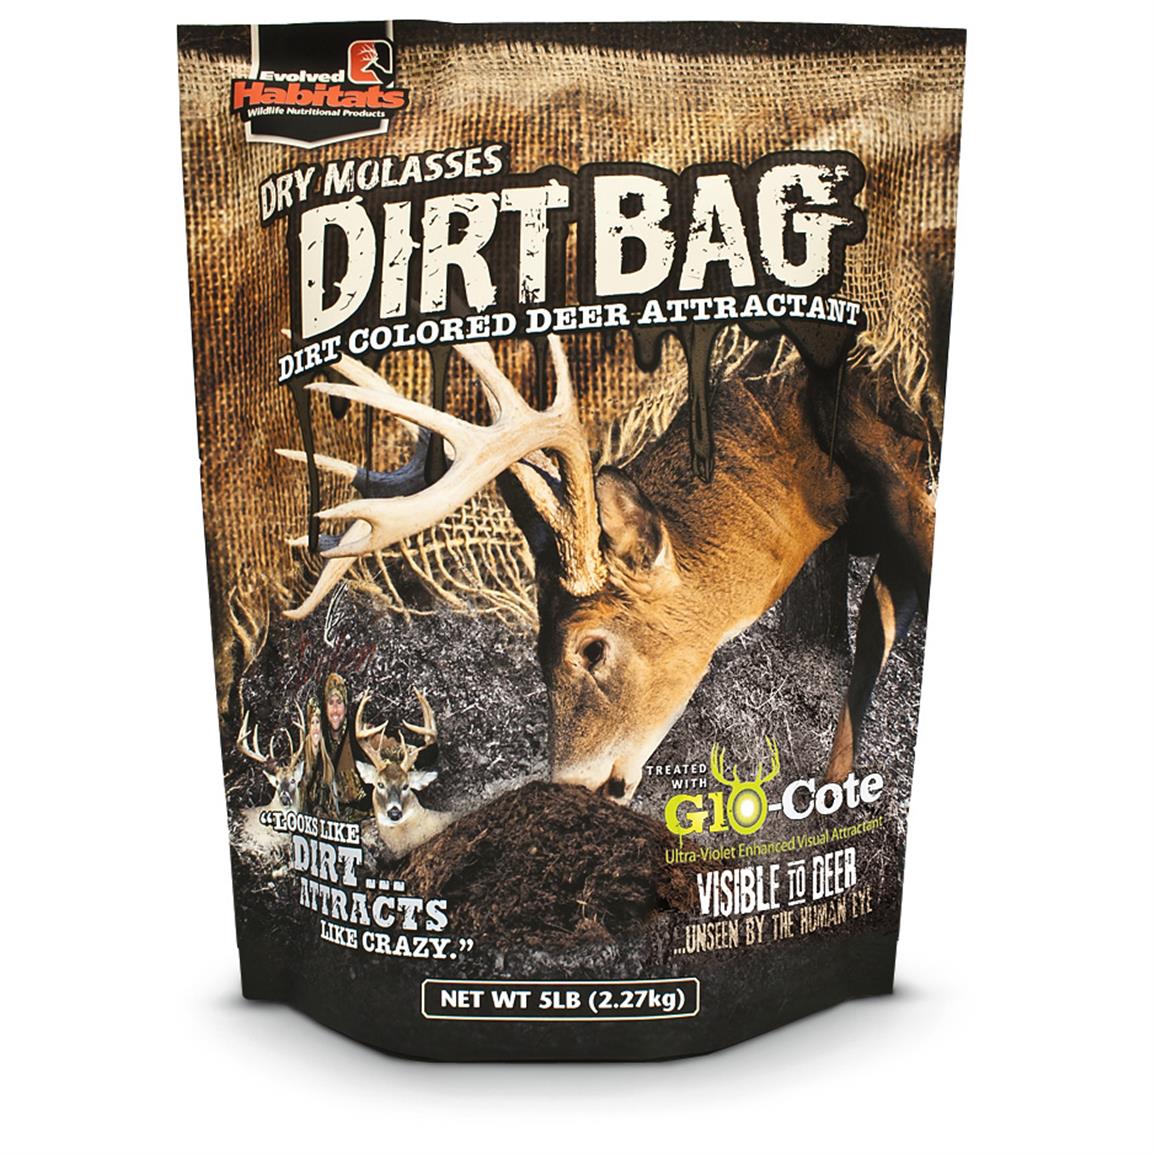 Bag of Evolved Habitats Dirt Bag Deer Attractant, 5 lbs.